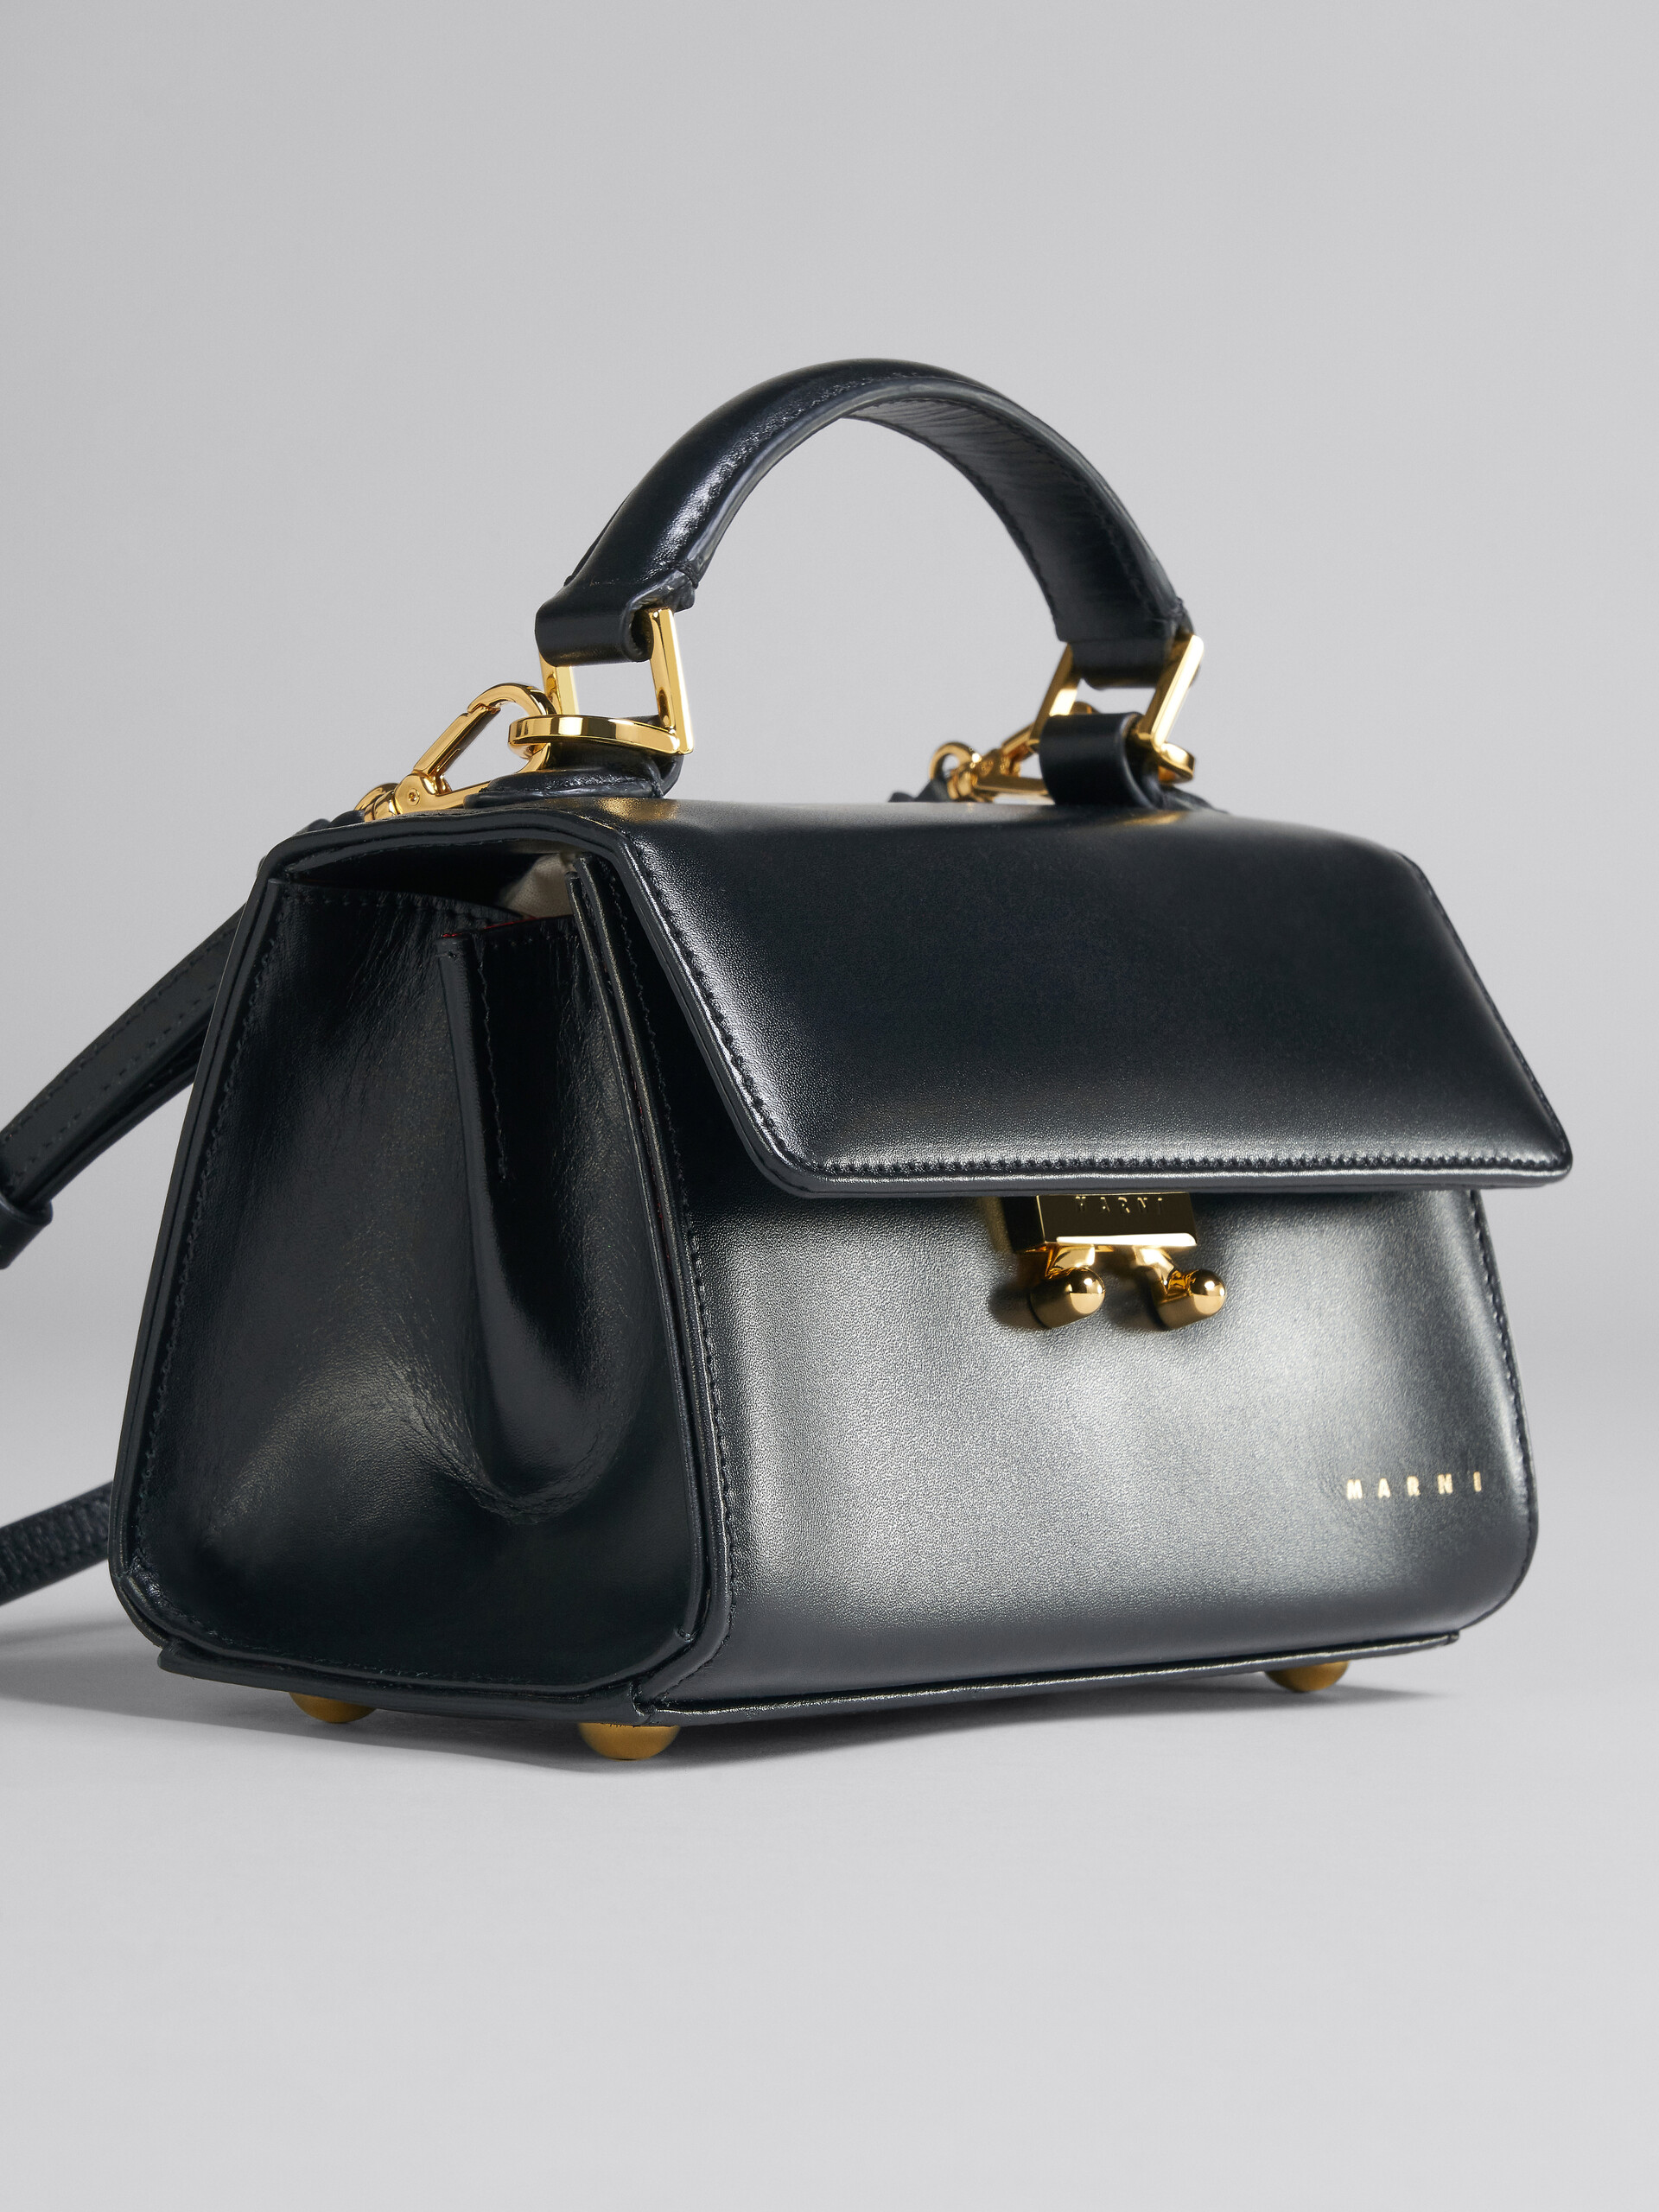 Relativity Mini Bag in black leather - Handbag - Image 5